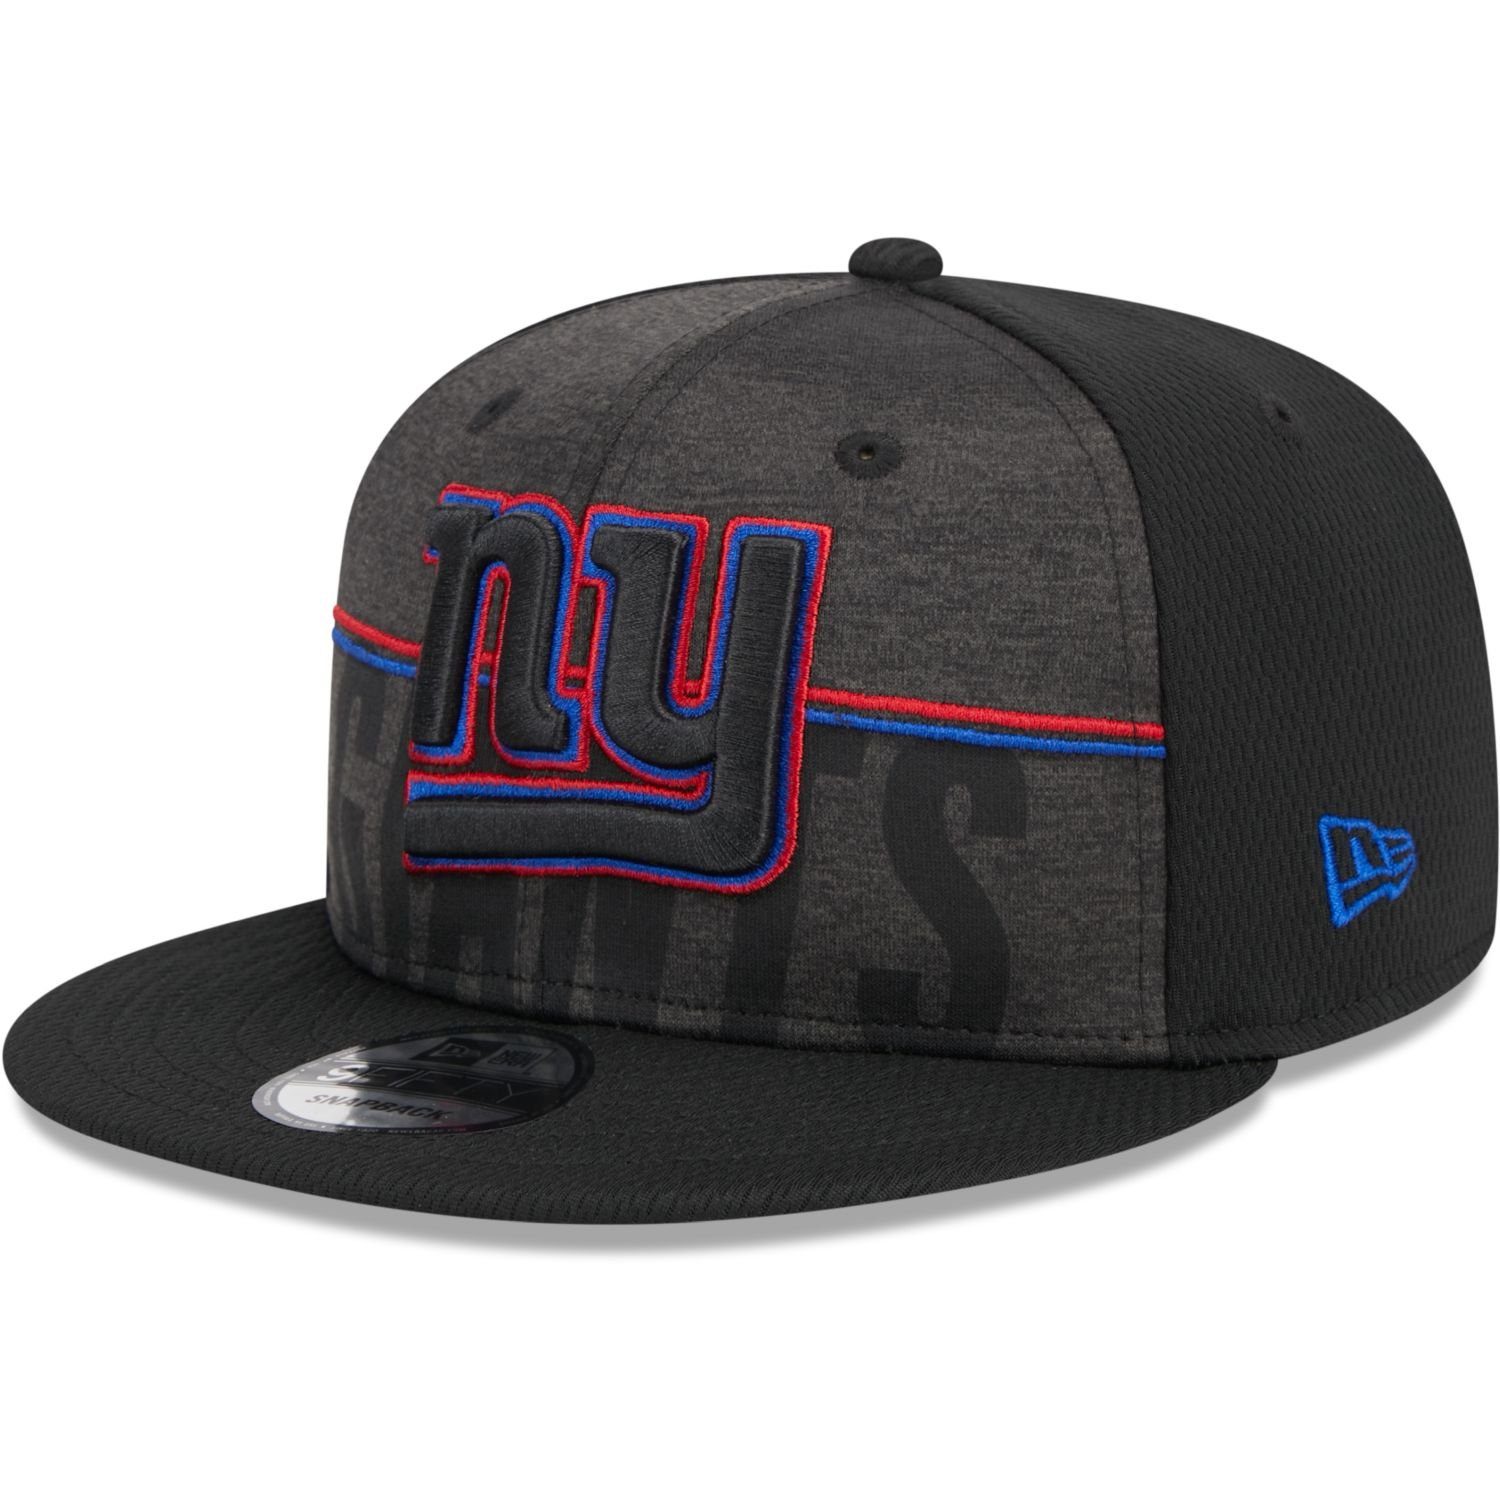 New Era Snapback Cap 9FIFTY TRAINING New York Giants